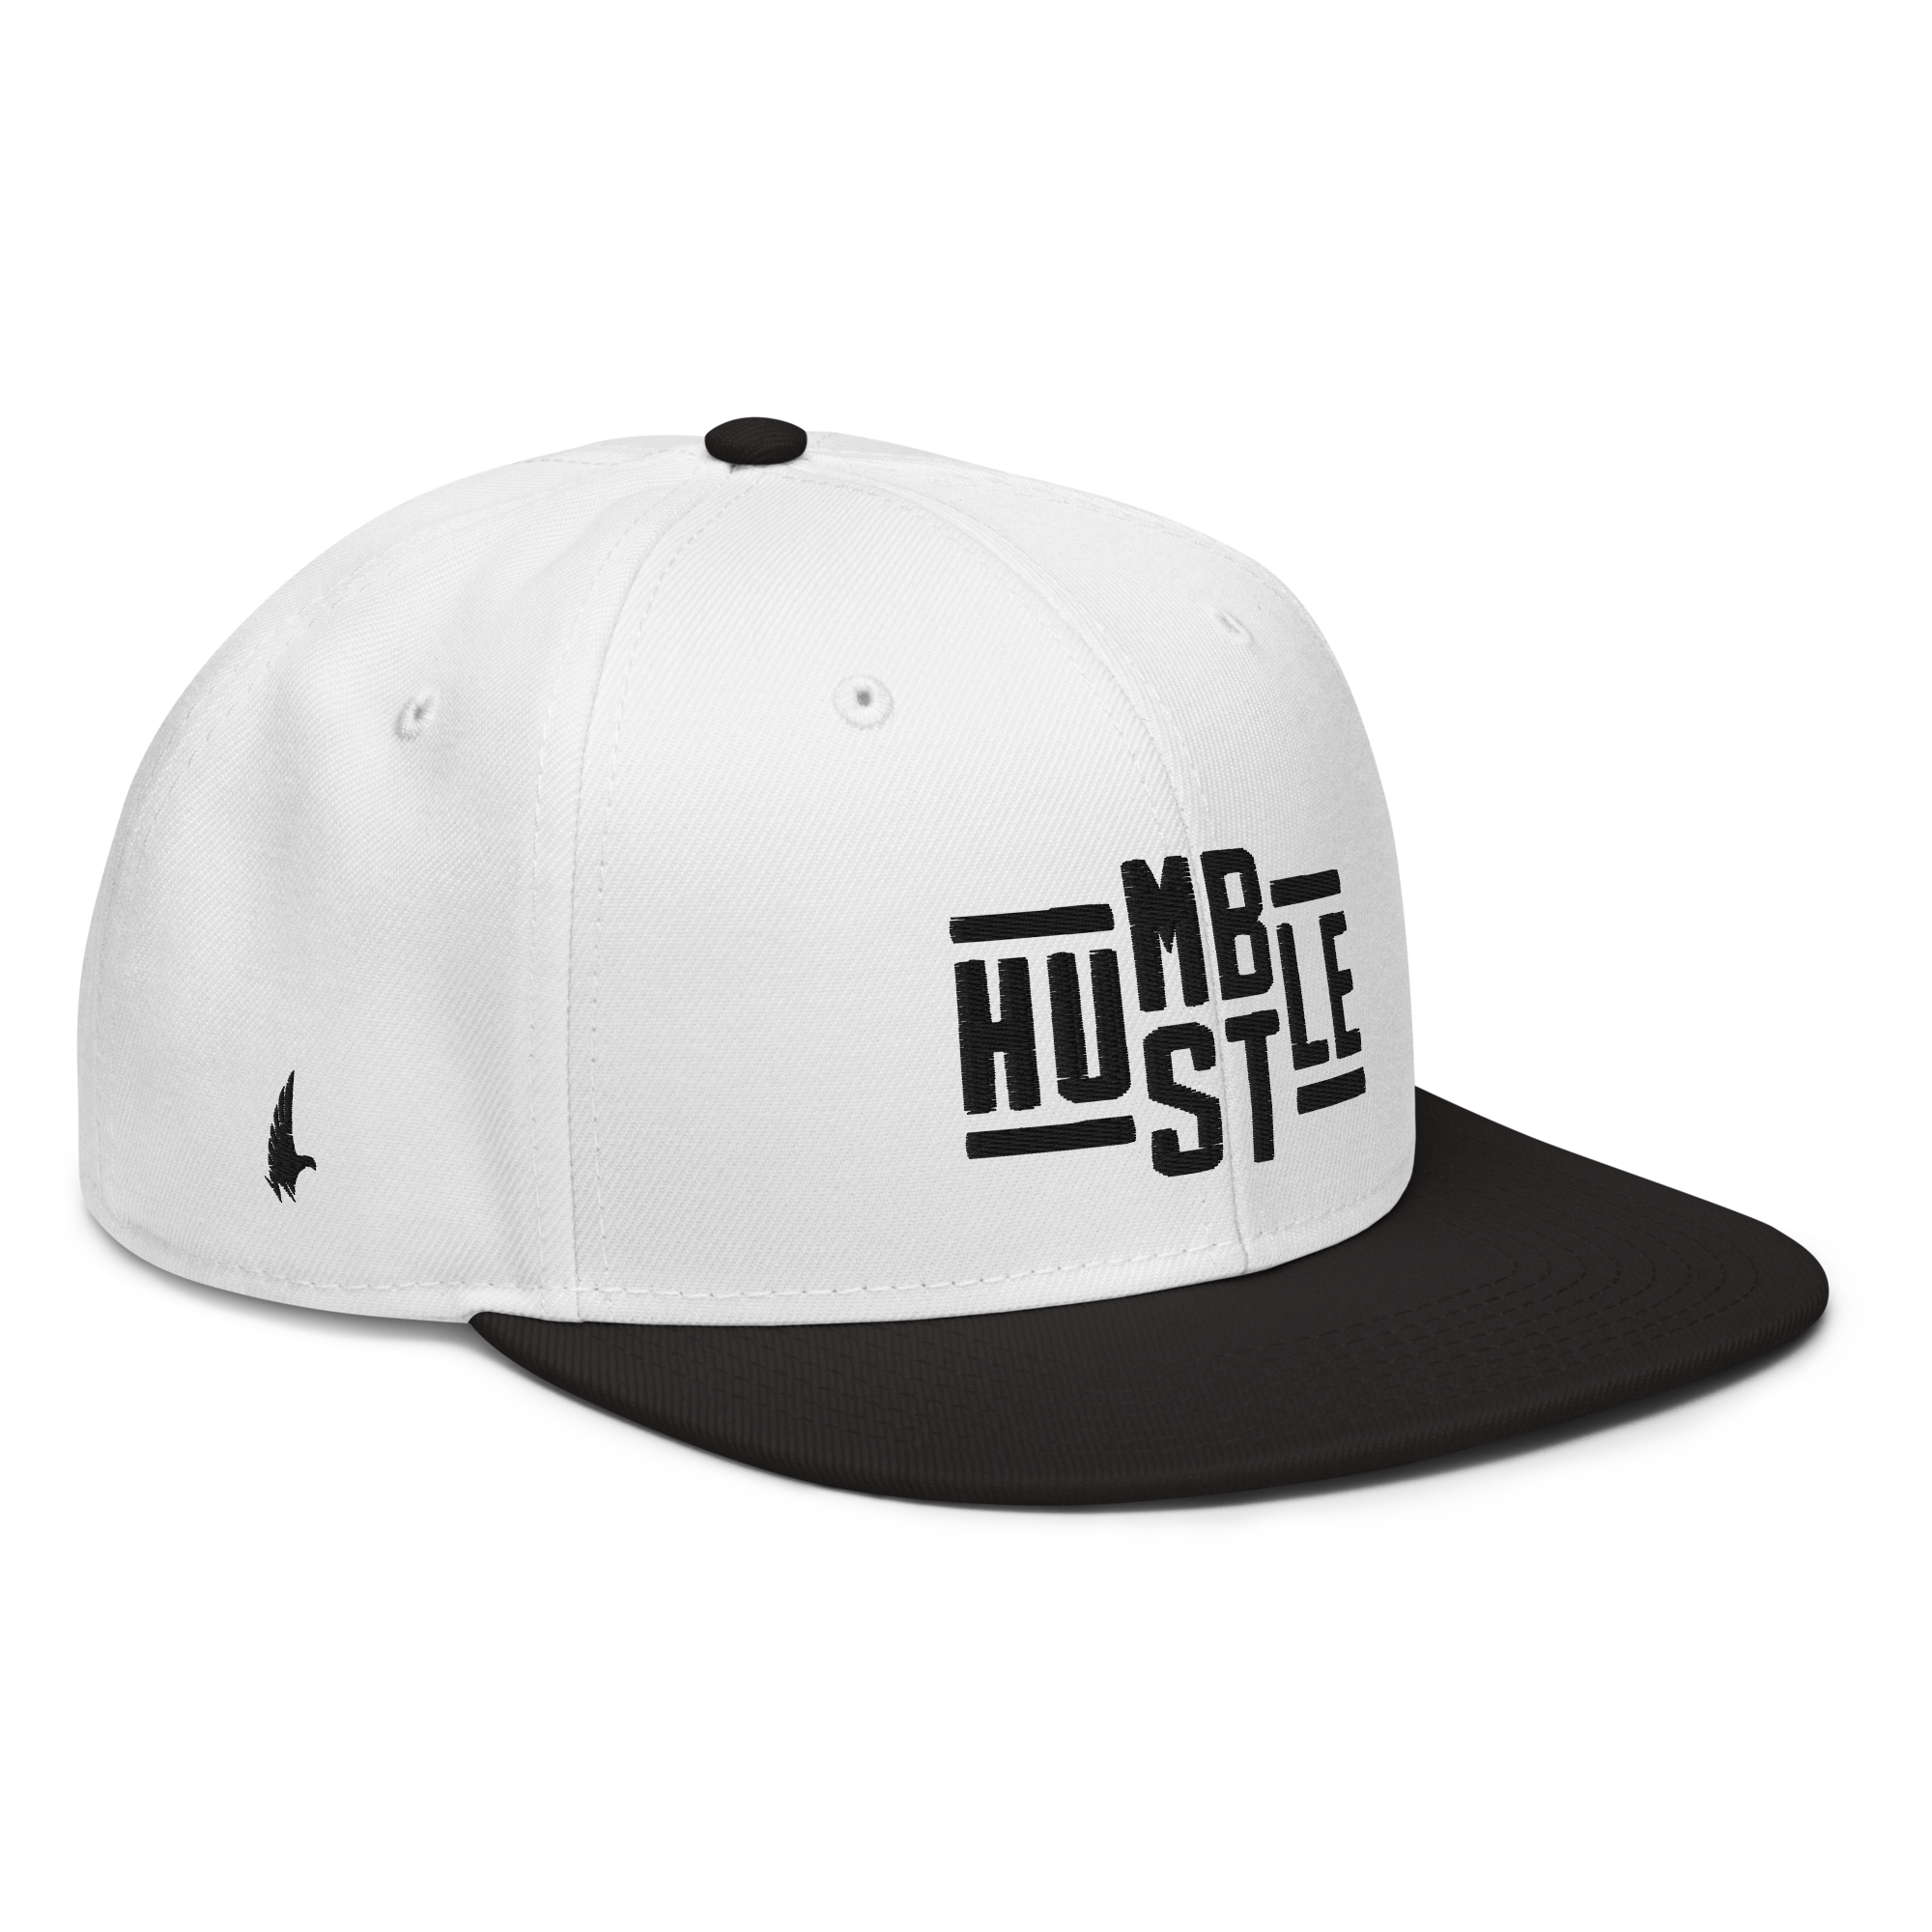 Hustle Snapback Hat - White/Black/Black OS - Loyalty Vibes